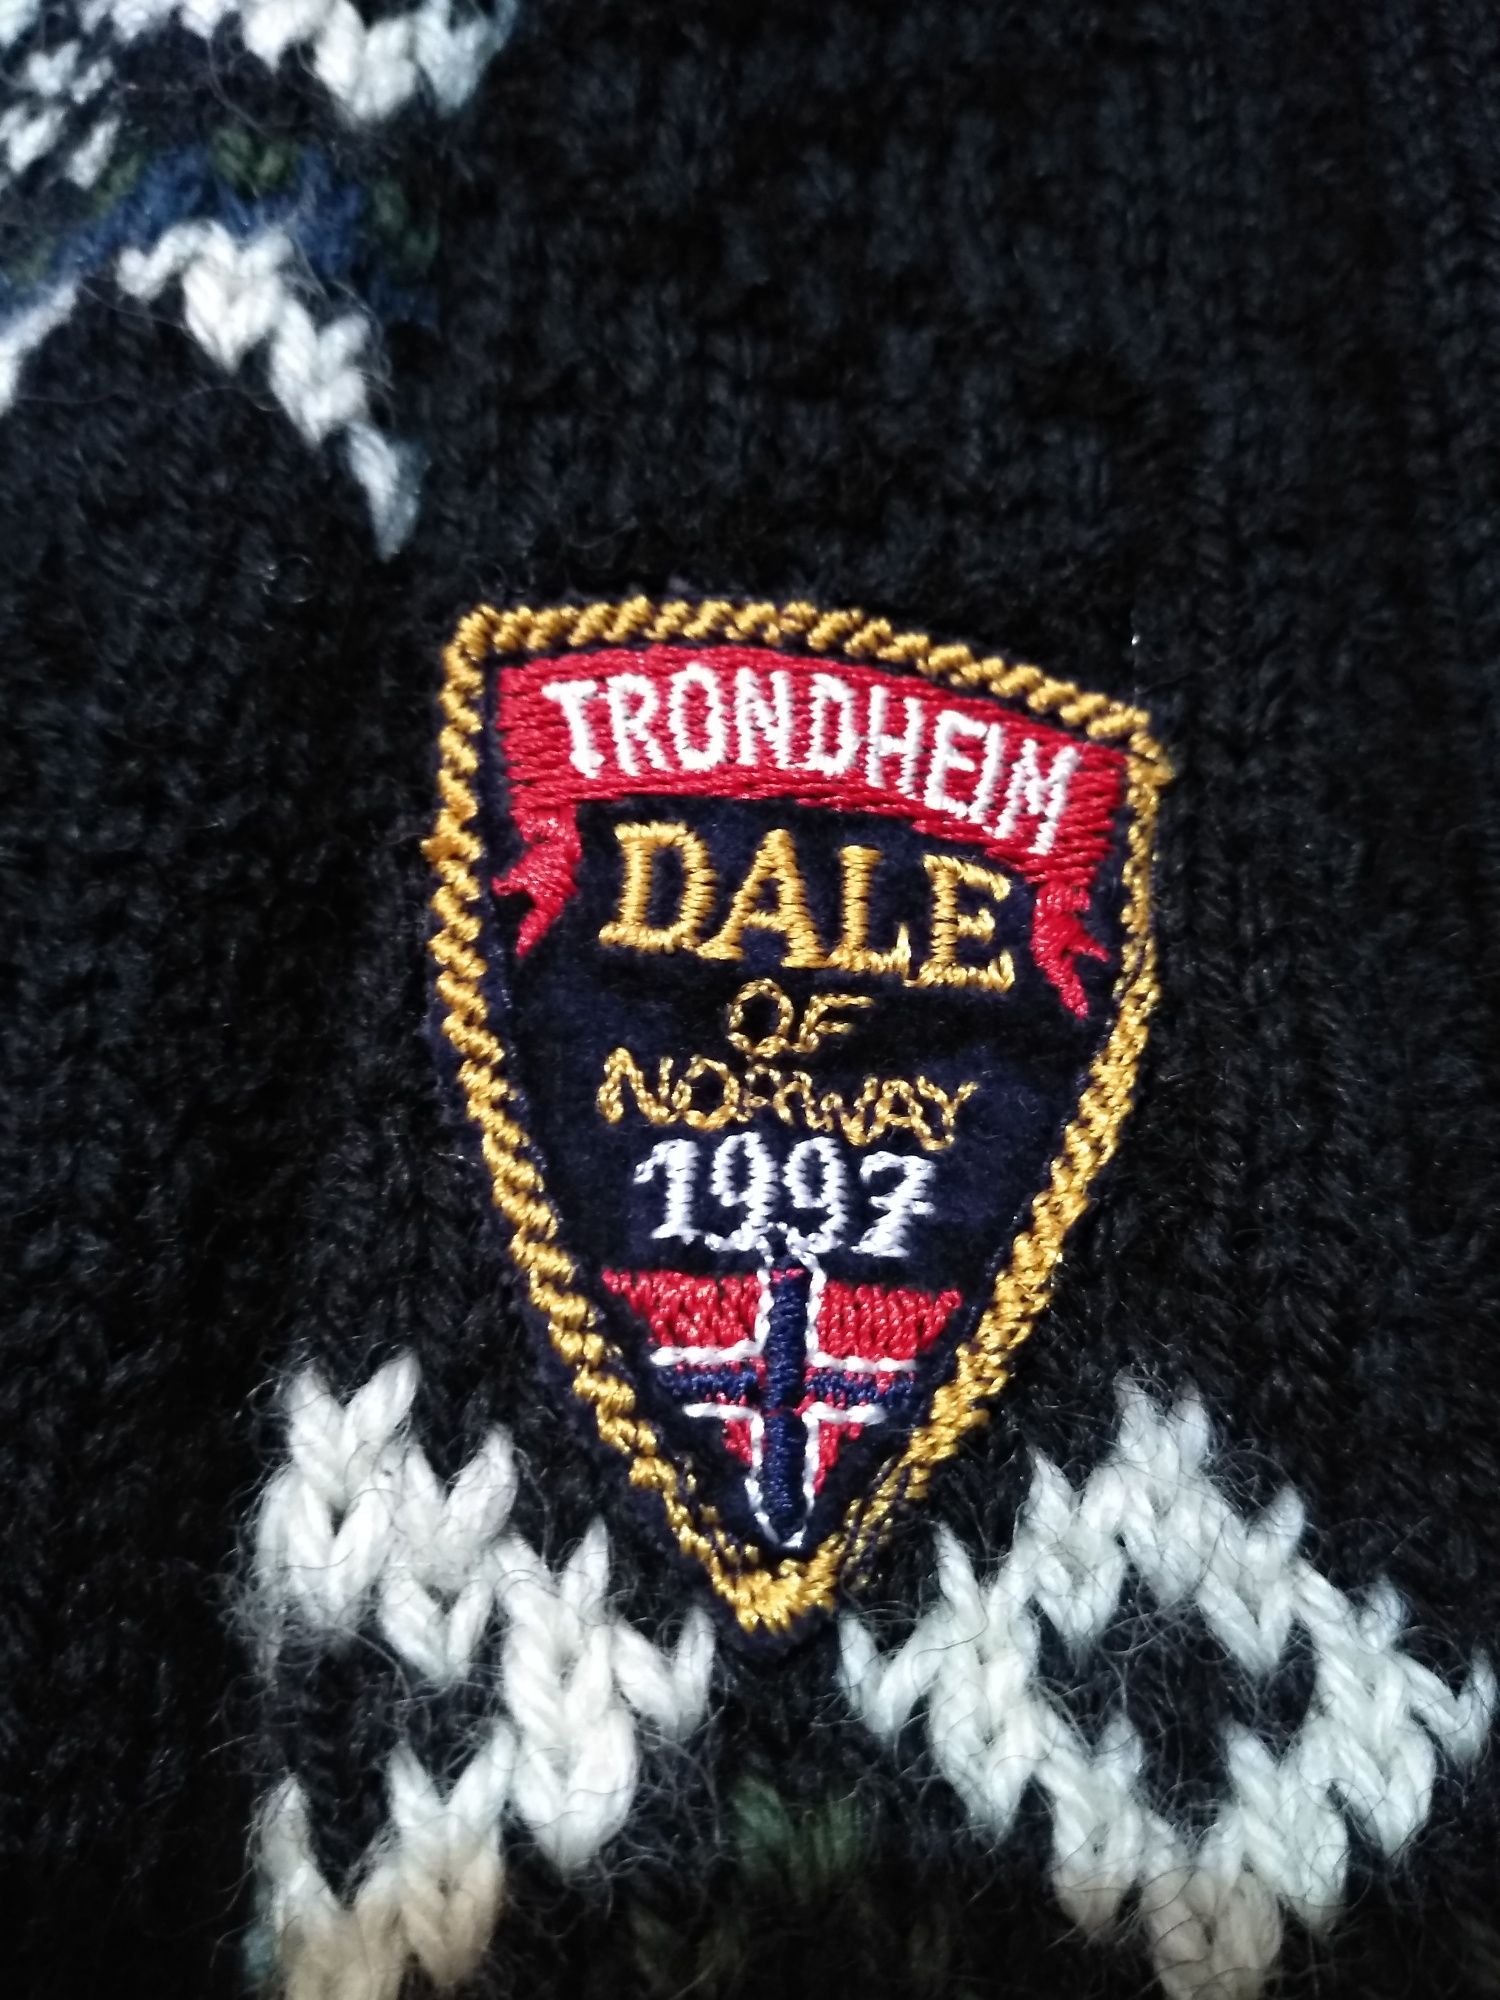 Dale of Norway Trondheim 1997